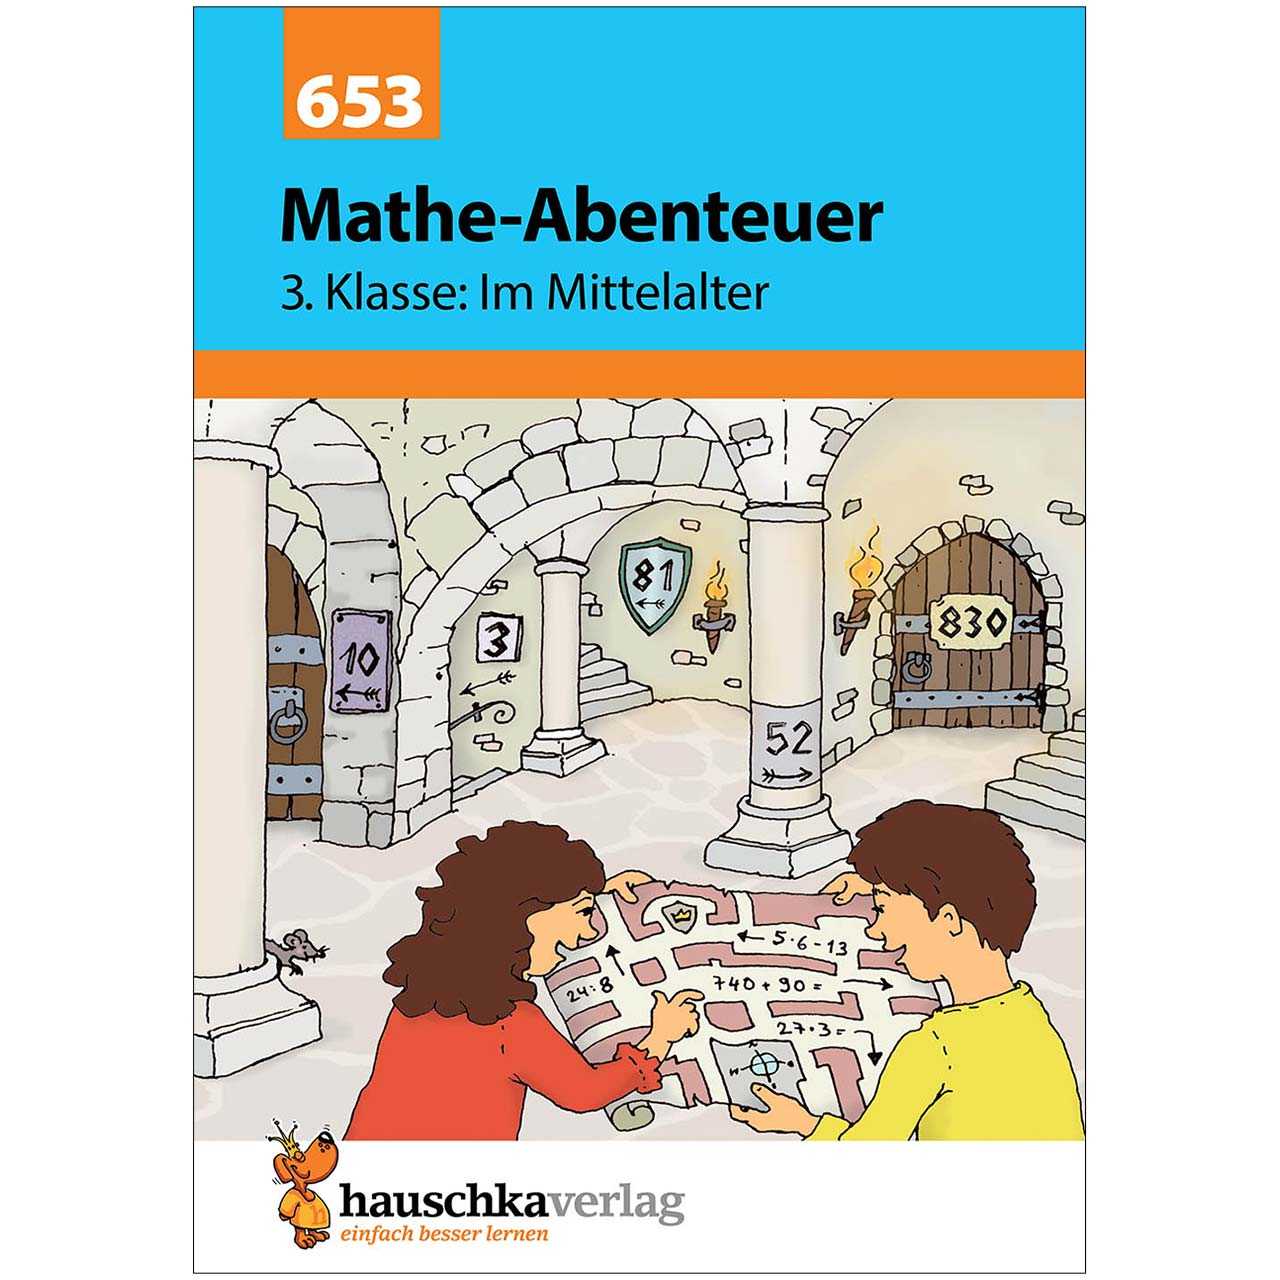 Mathe-Abenteuer – 3. Klasse im Mittelalter